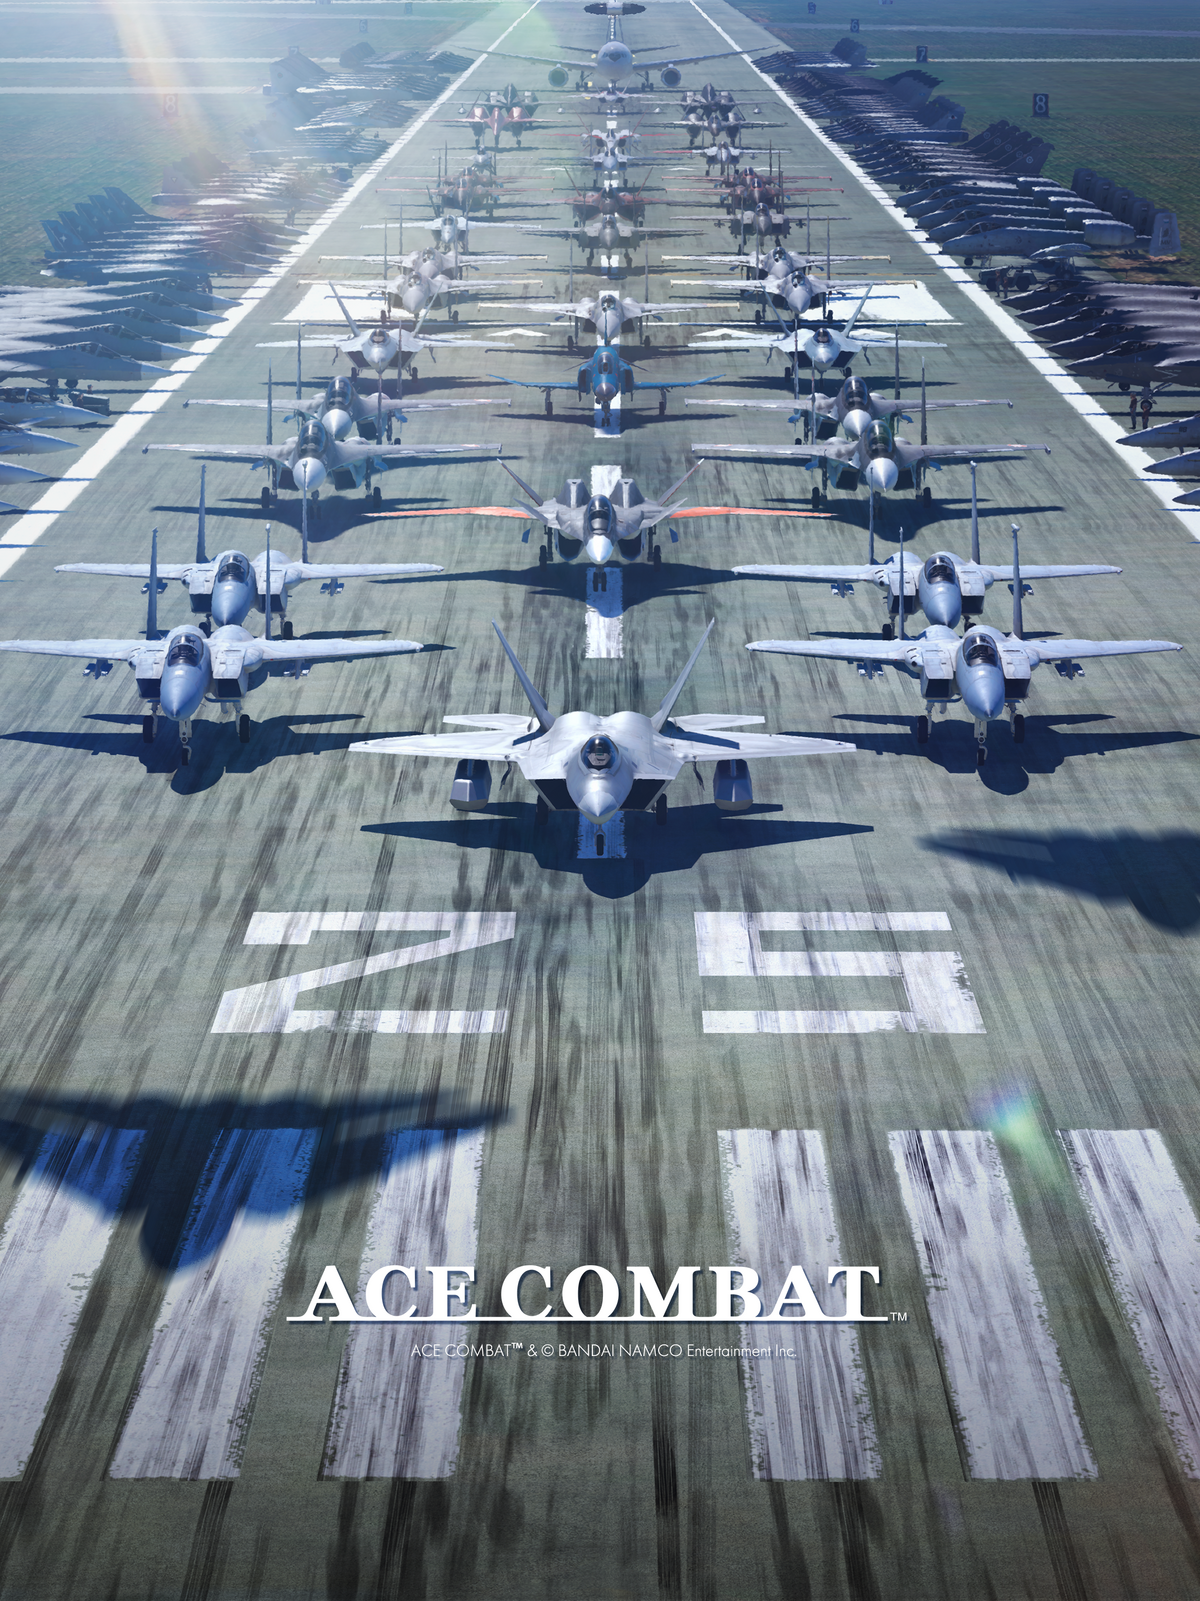 Ace Combat, Acepedia